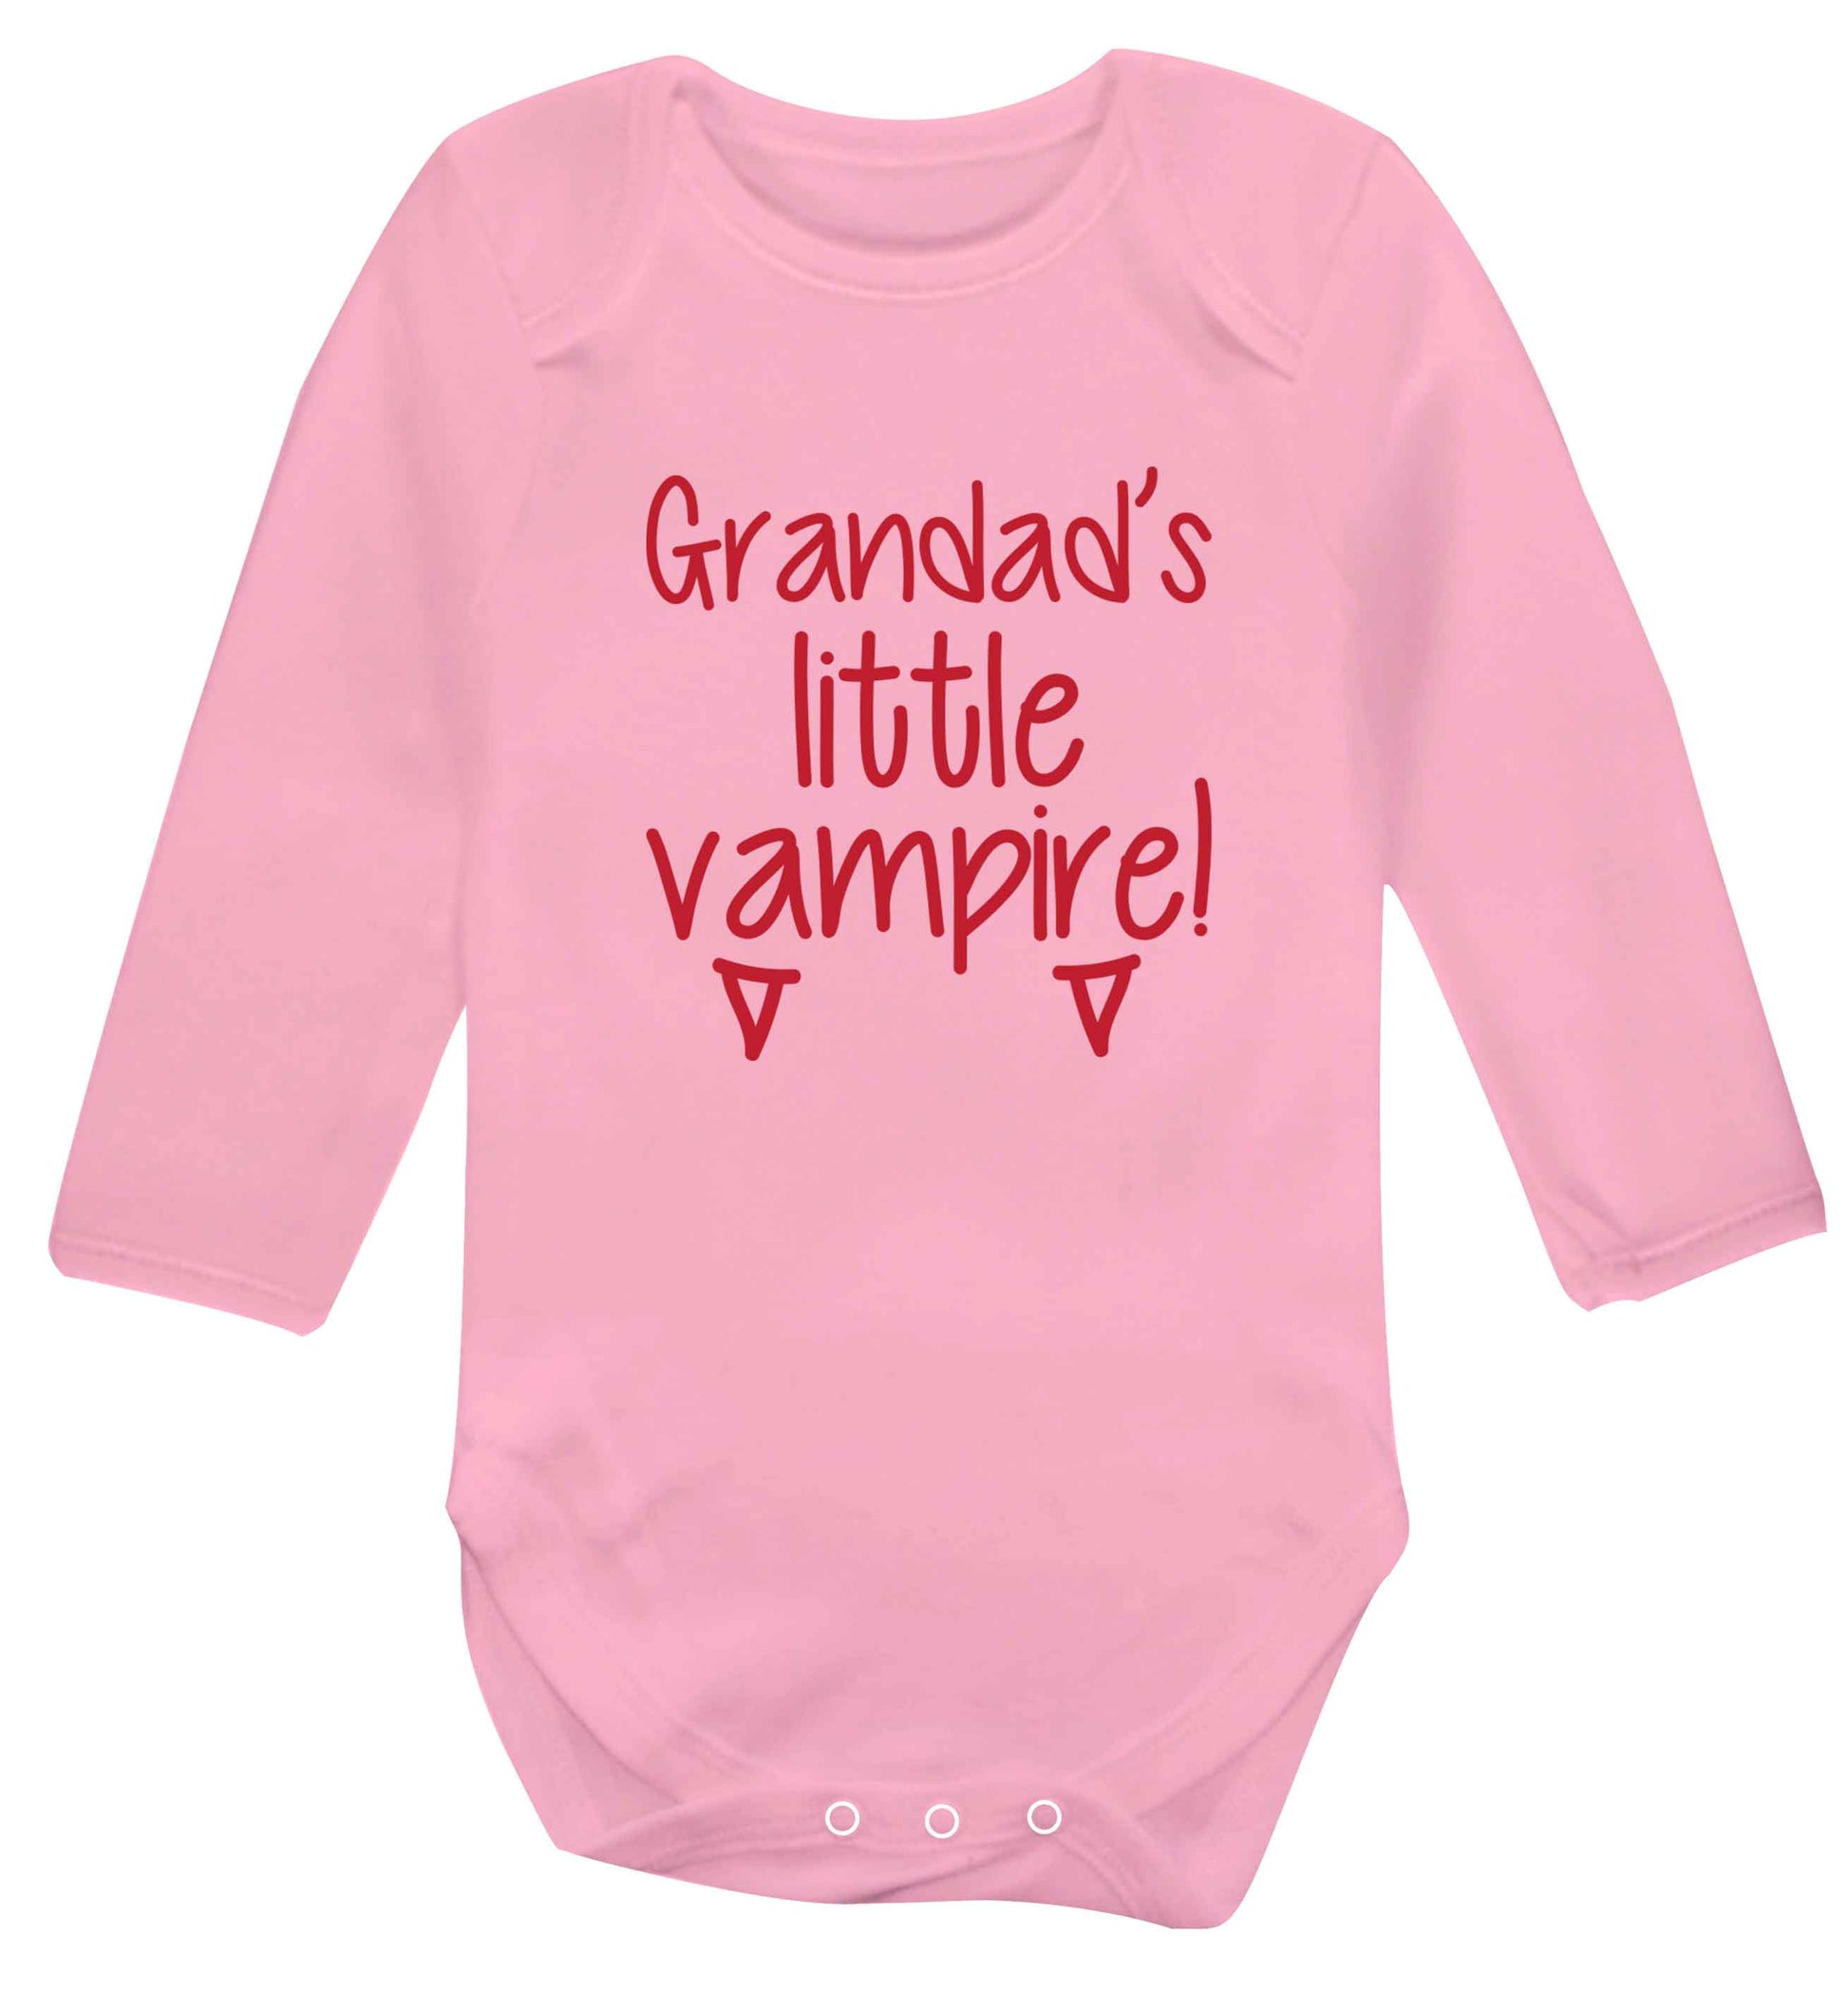 Grandad's little vampire baby vest long sleeved pale pink 6-12 months